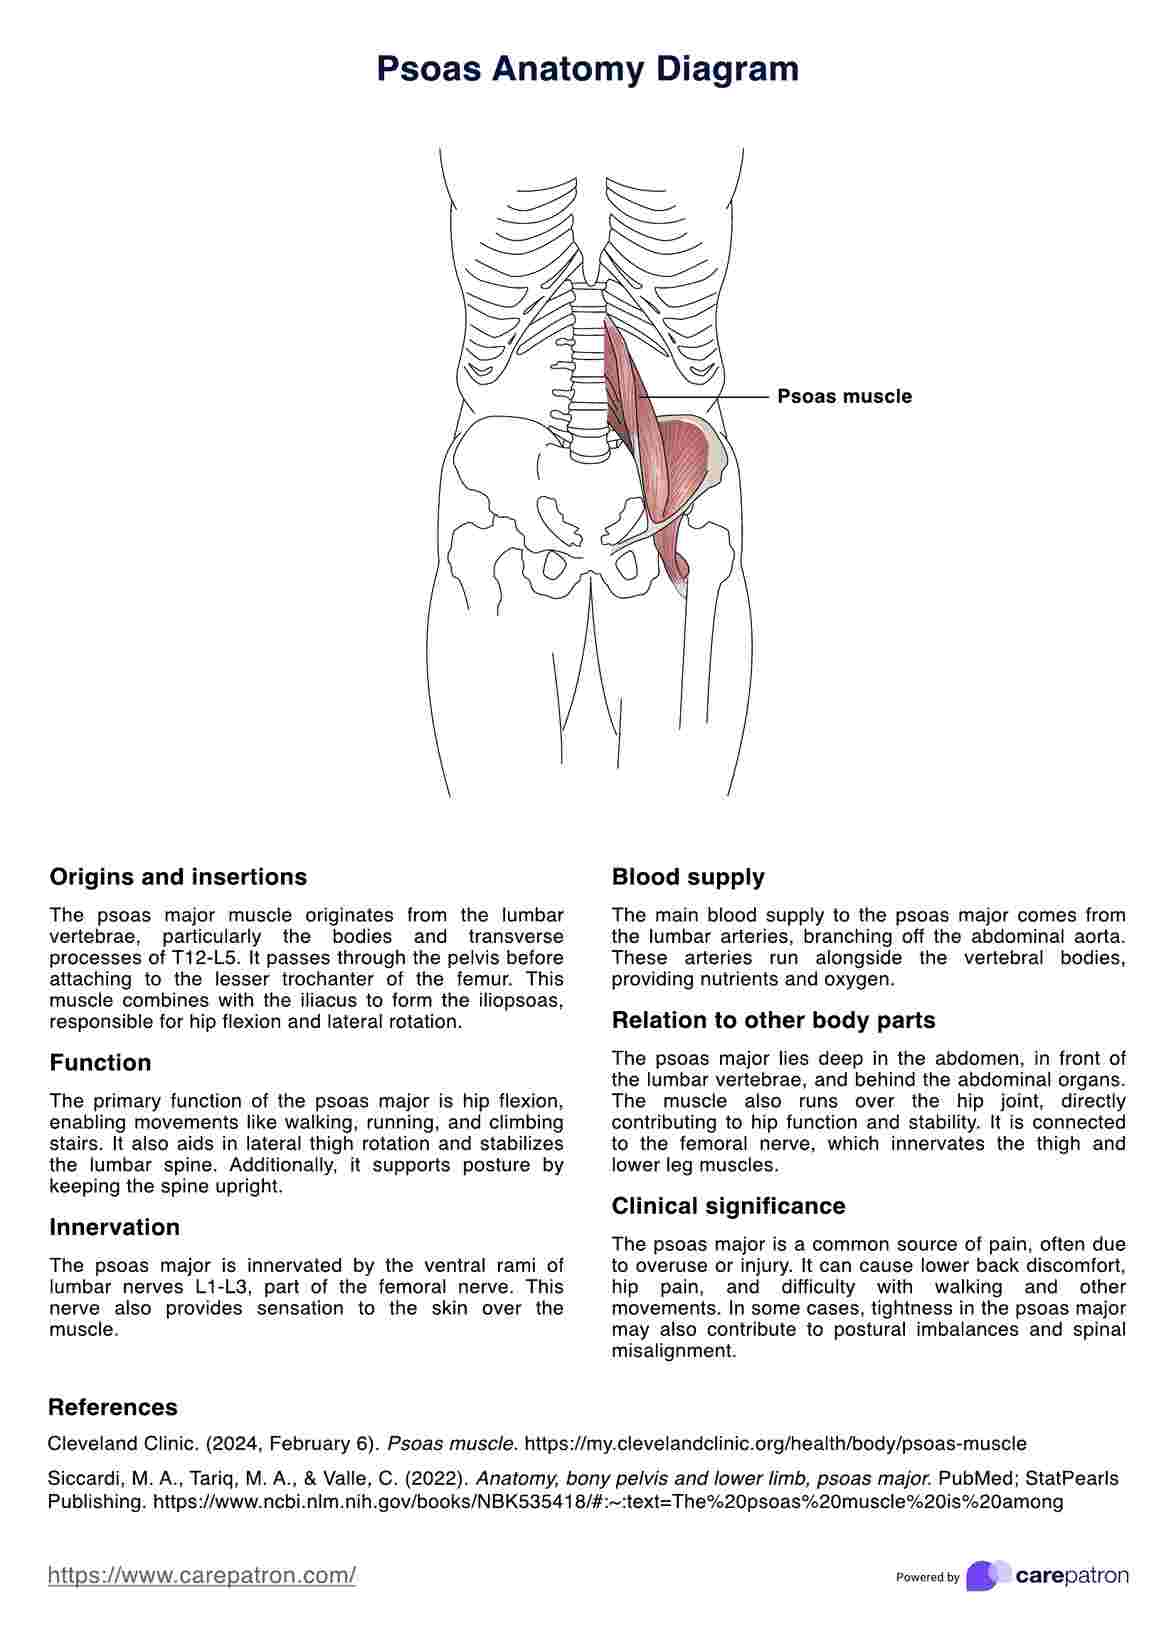 Psoas Anatomy Diagram PDF Example